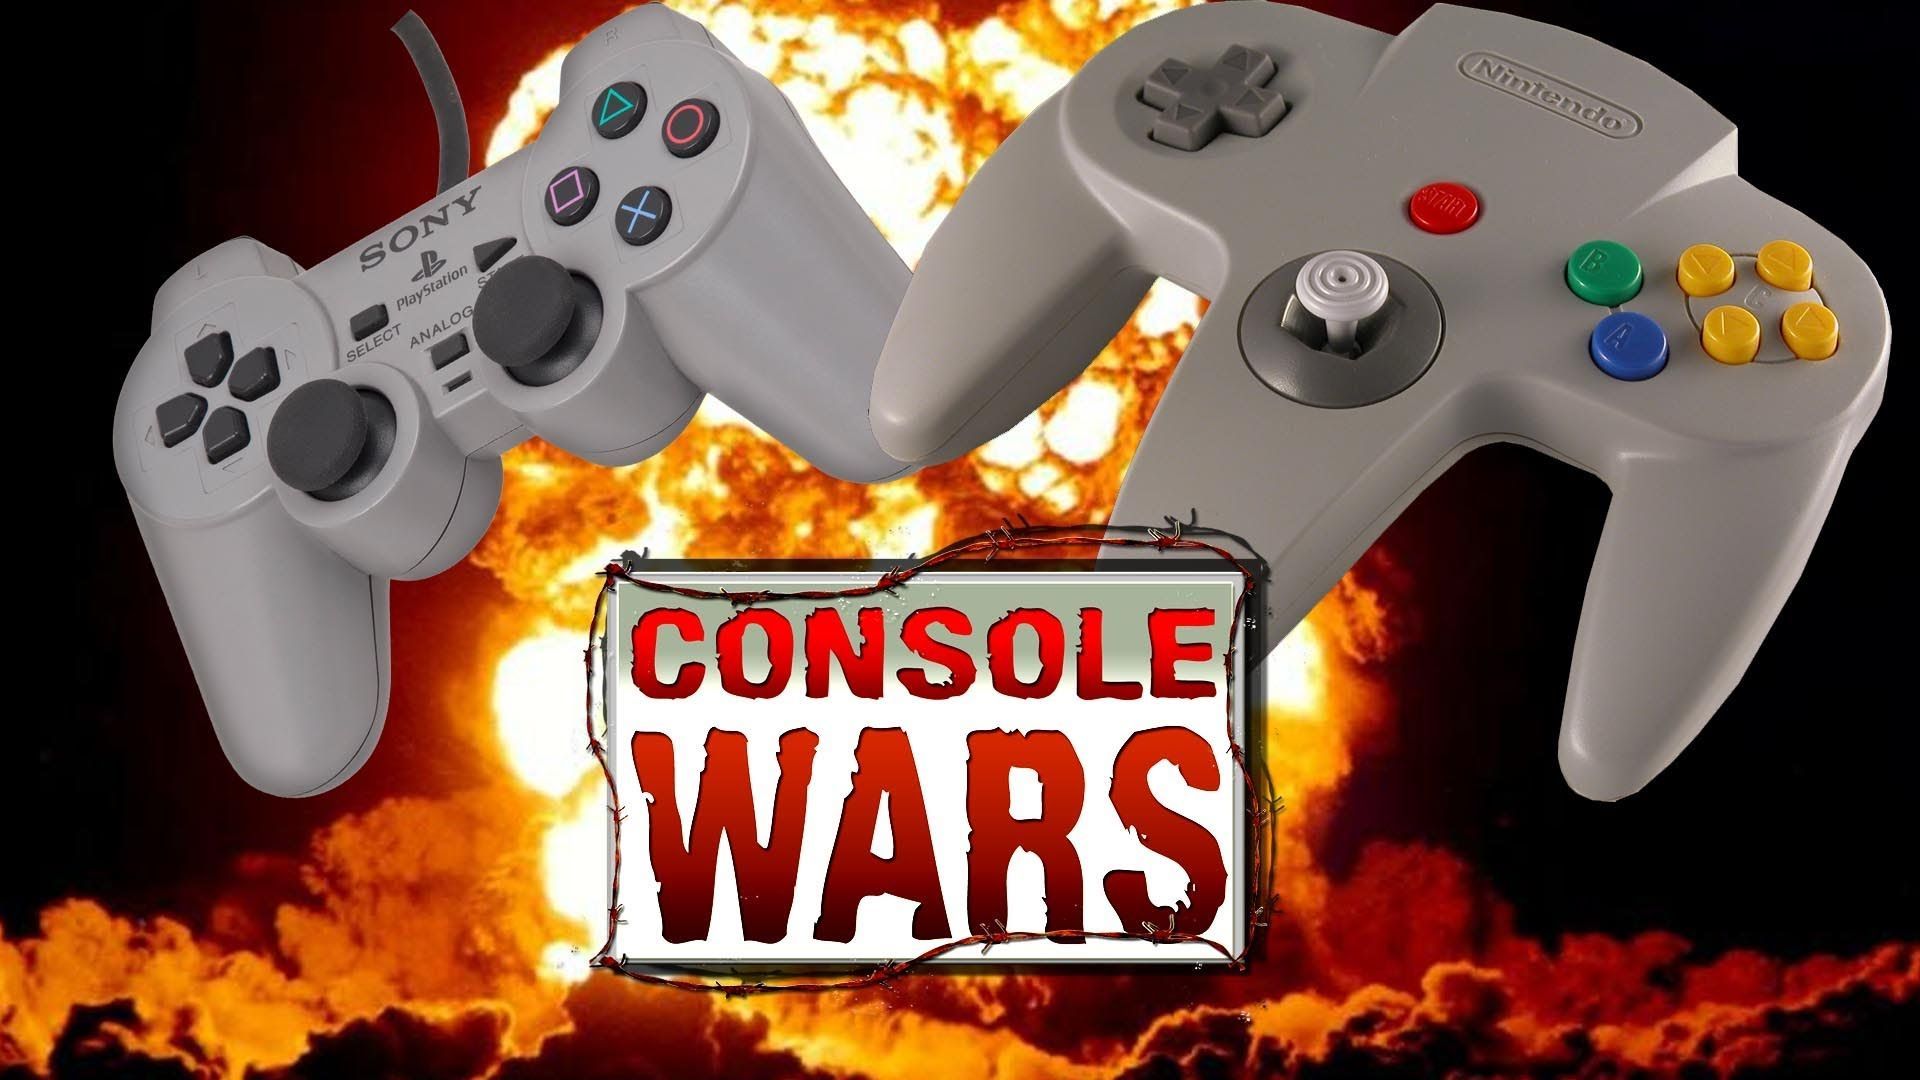 '90s Vidoe Game Console Wars